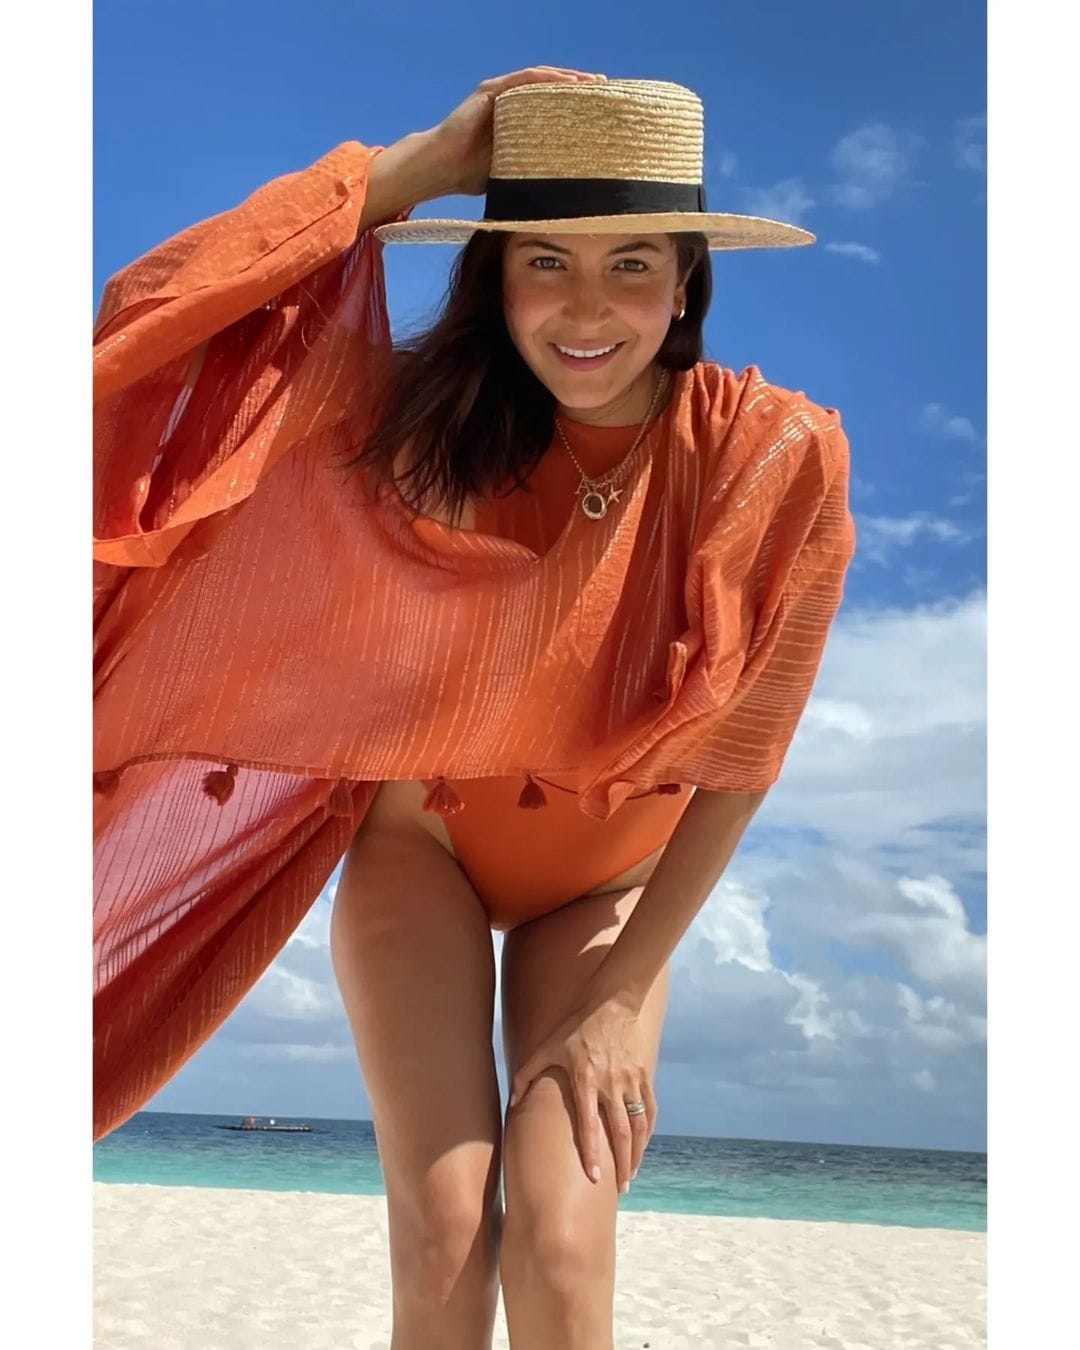 Anushka Sharma at the beach in an orange swimsuit.